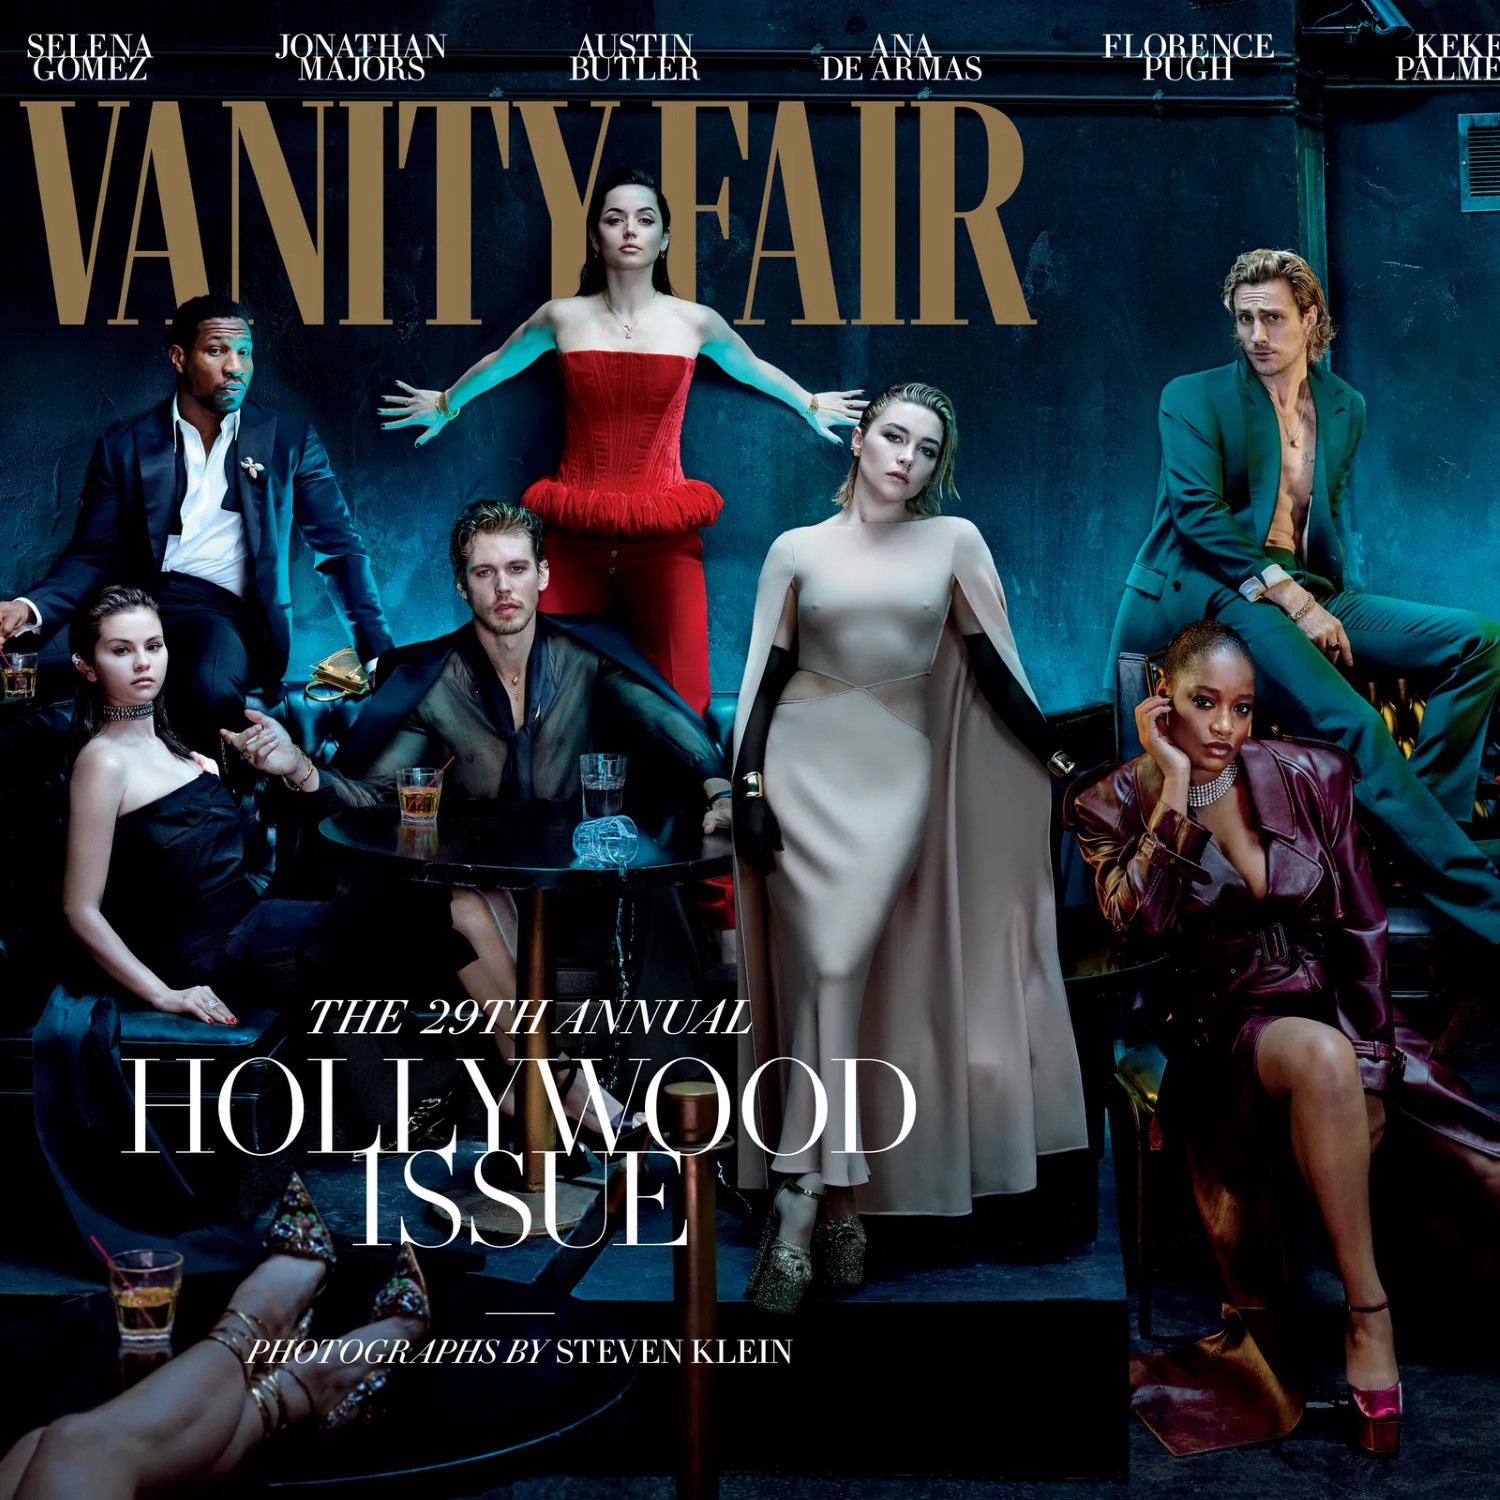 Ana de Armas Covers Vanity Fair March 2020 Issue